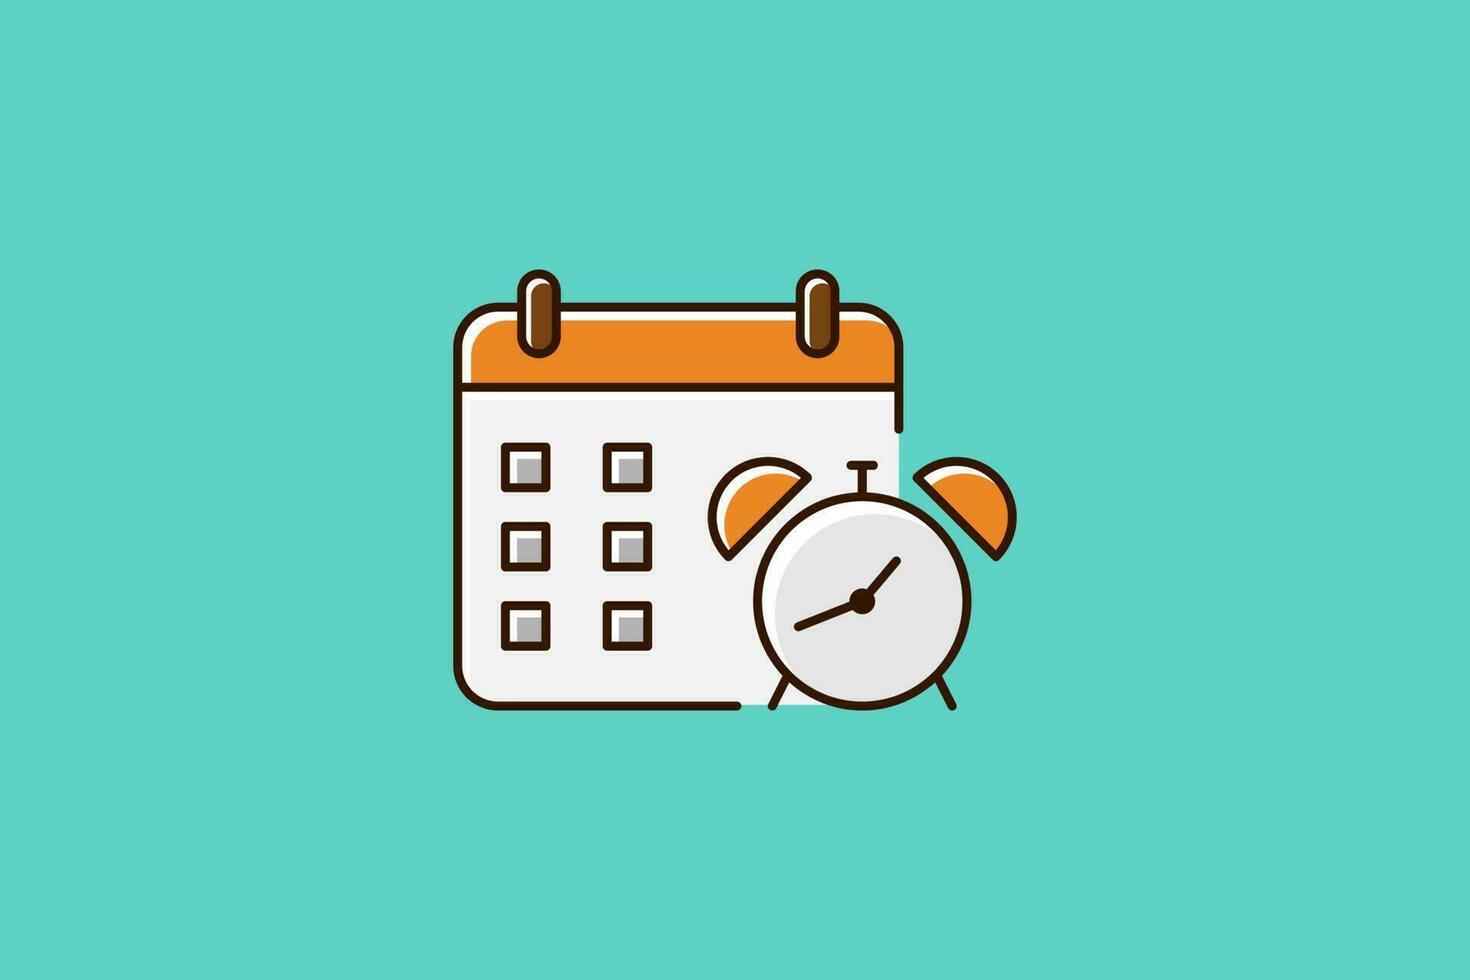 Calendar and alarm clock icon vector